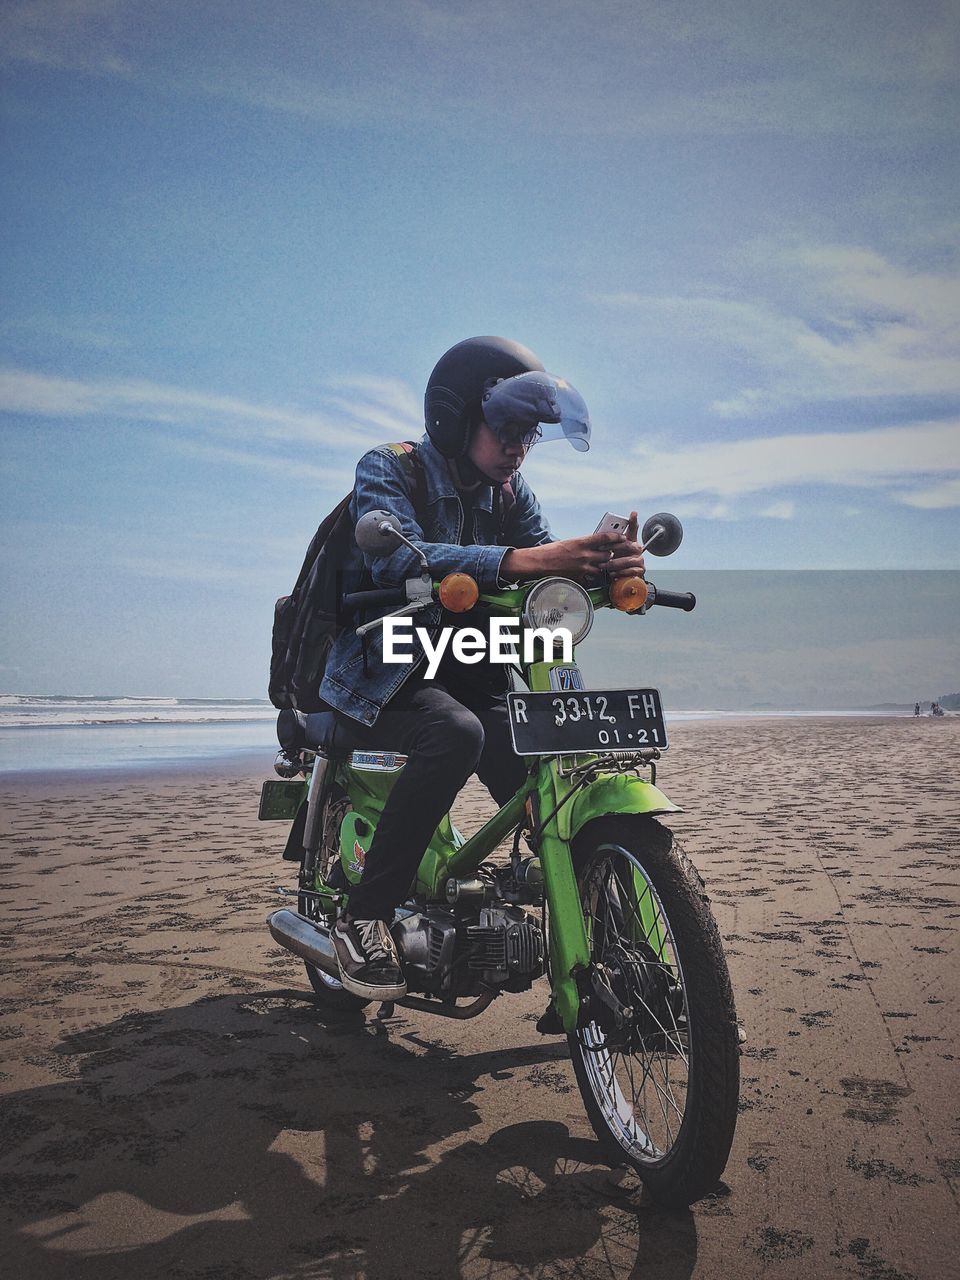 MAN RIDING MOTORCYCLE ON BEACH